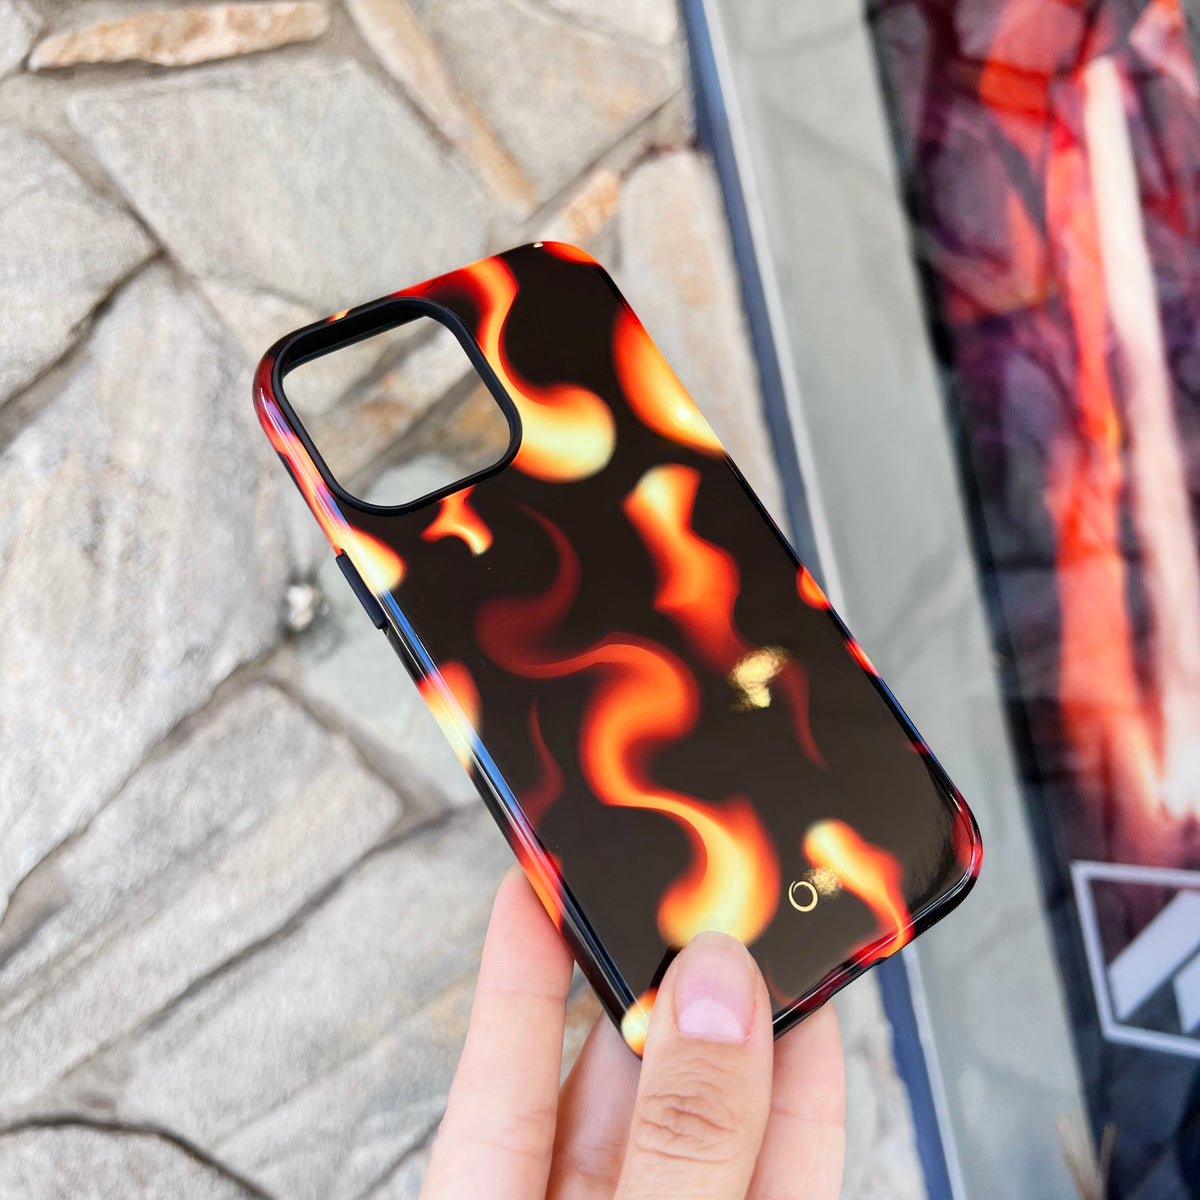 Groovy Orange Flame iPhone Case - iPhone 12 mini